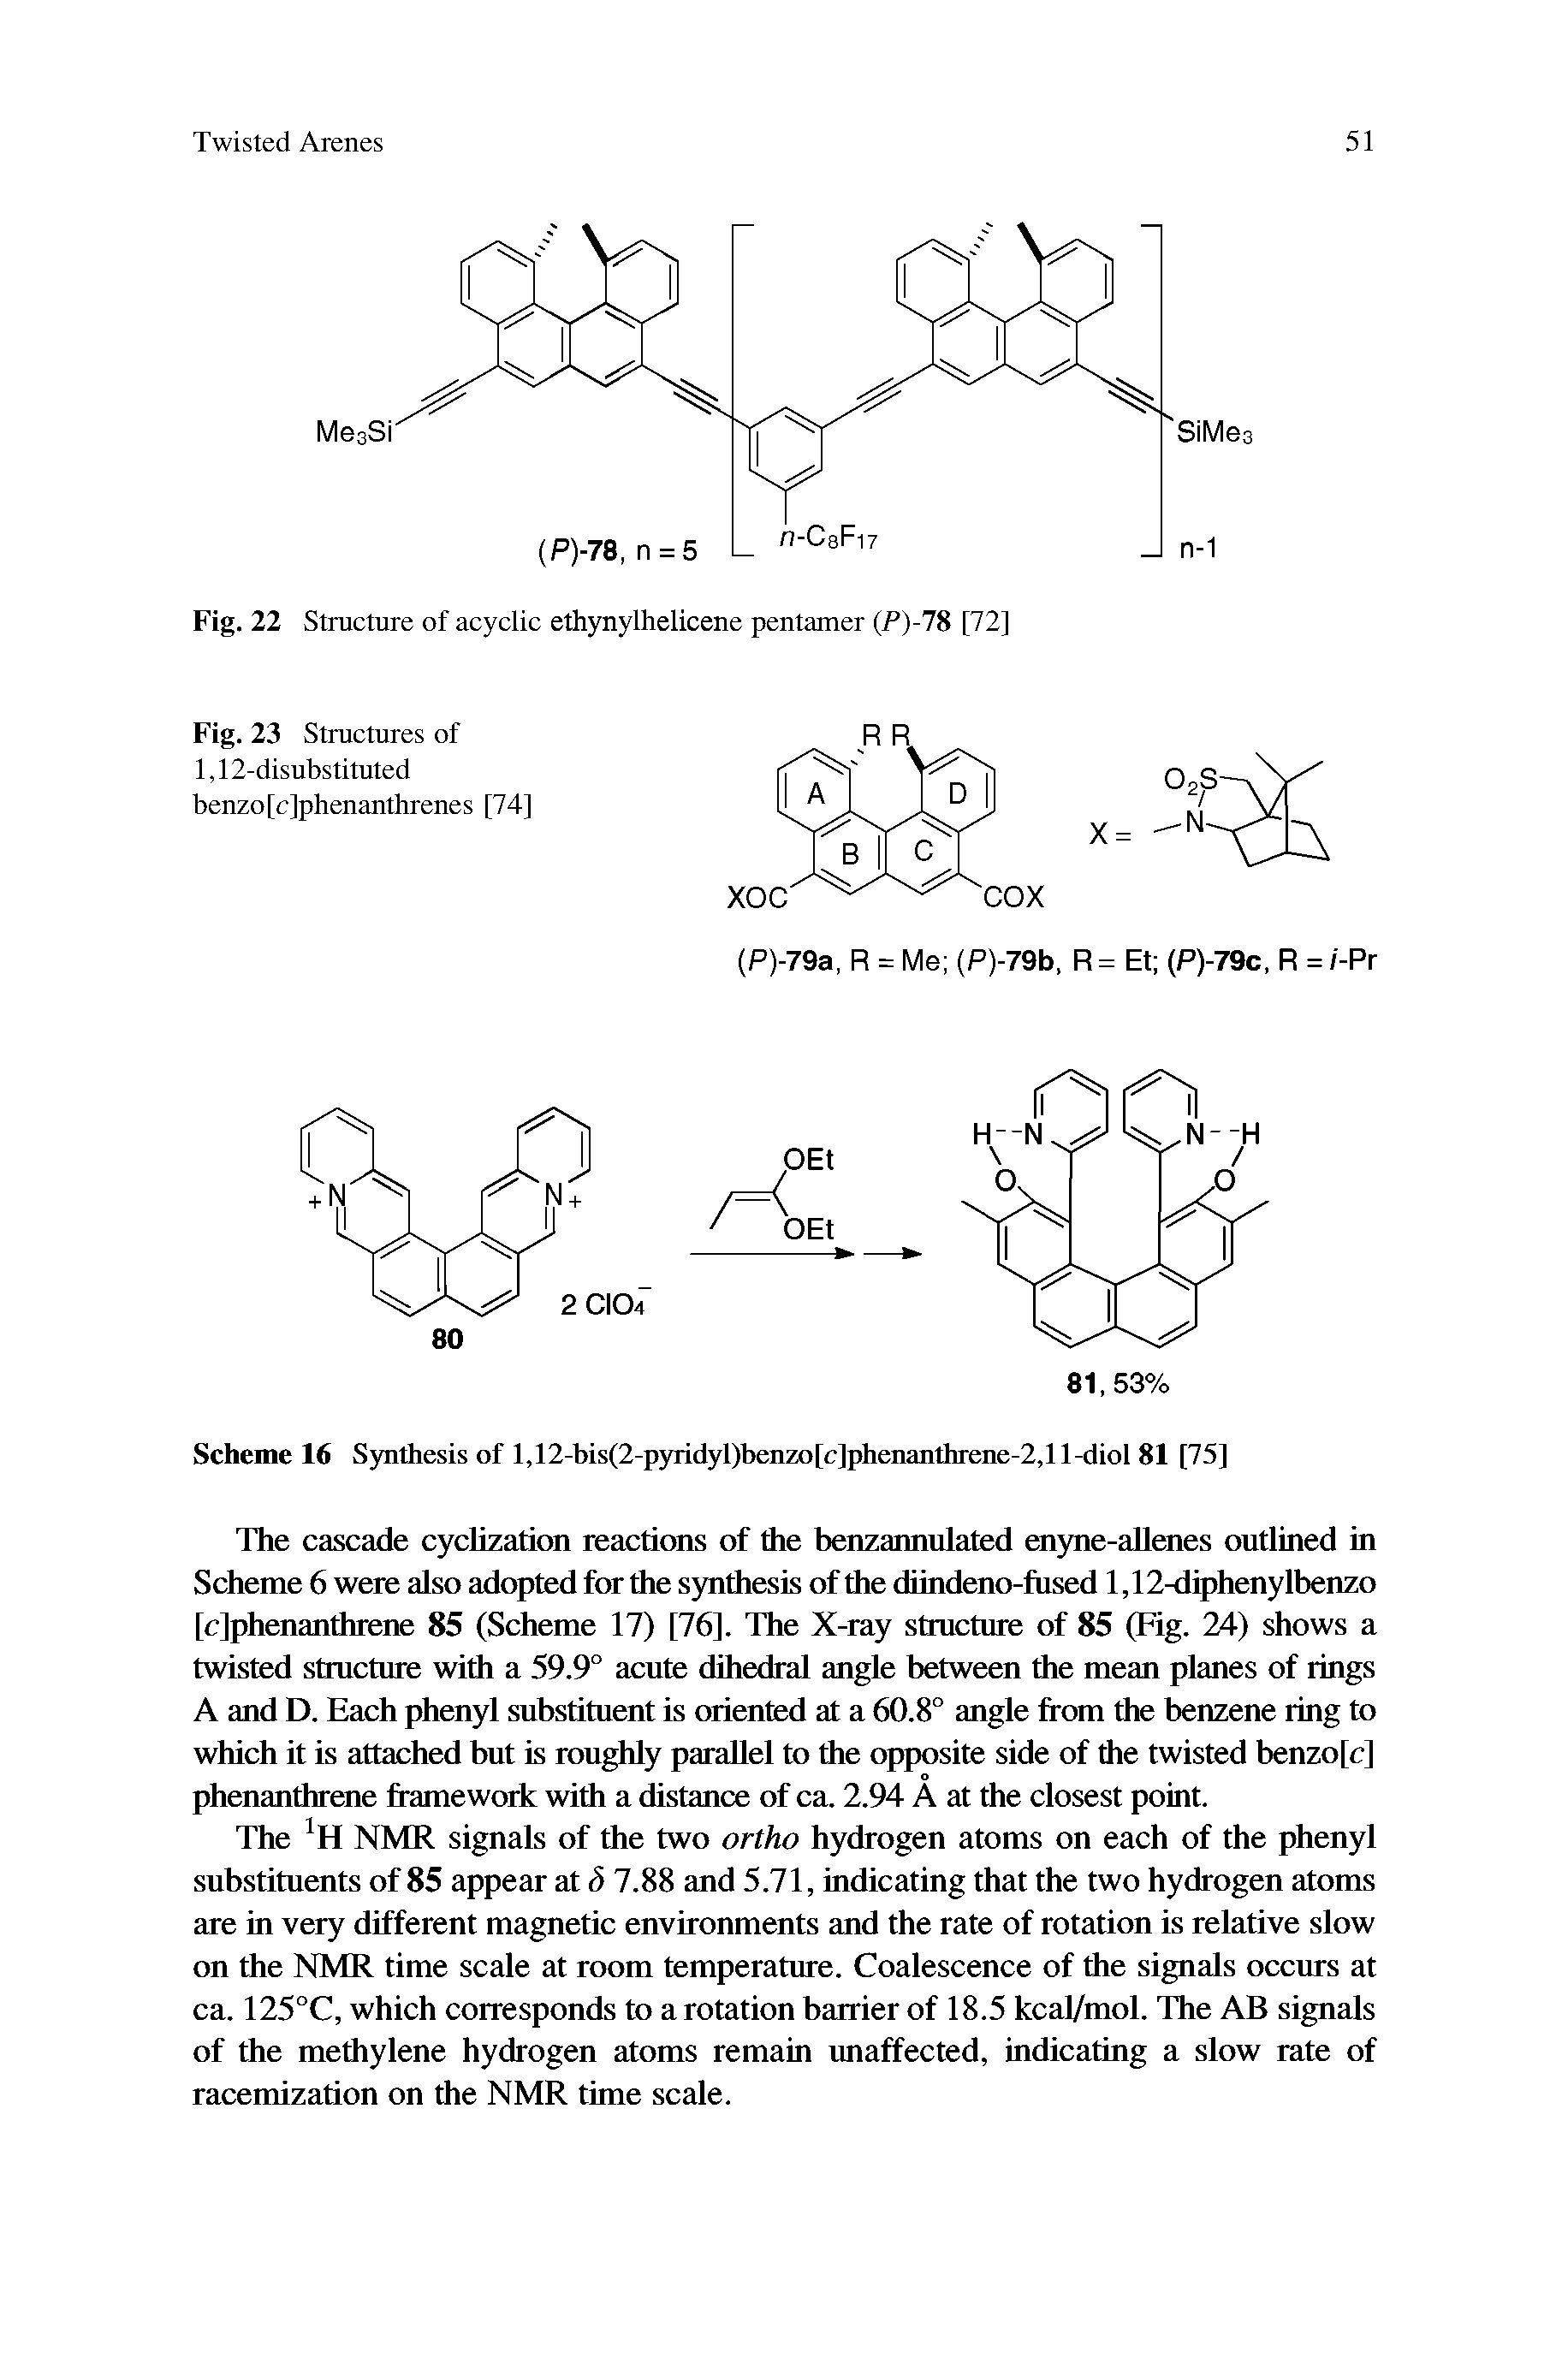 Scheme 16 Synthesis of l,12-bis(2-pyridyl)benzo[c]phenanthrene-2,ll-diol 81 [75]...